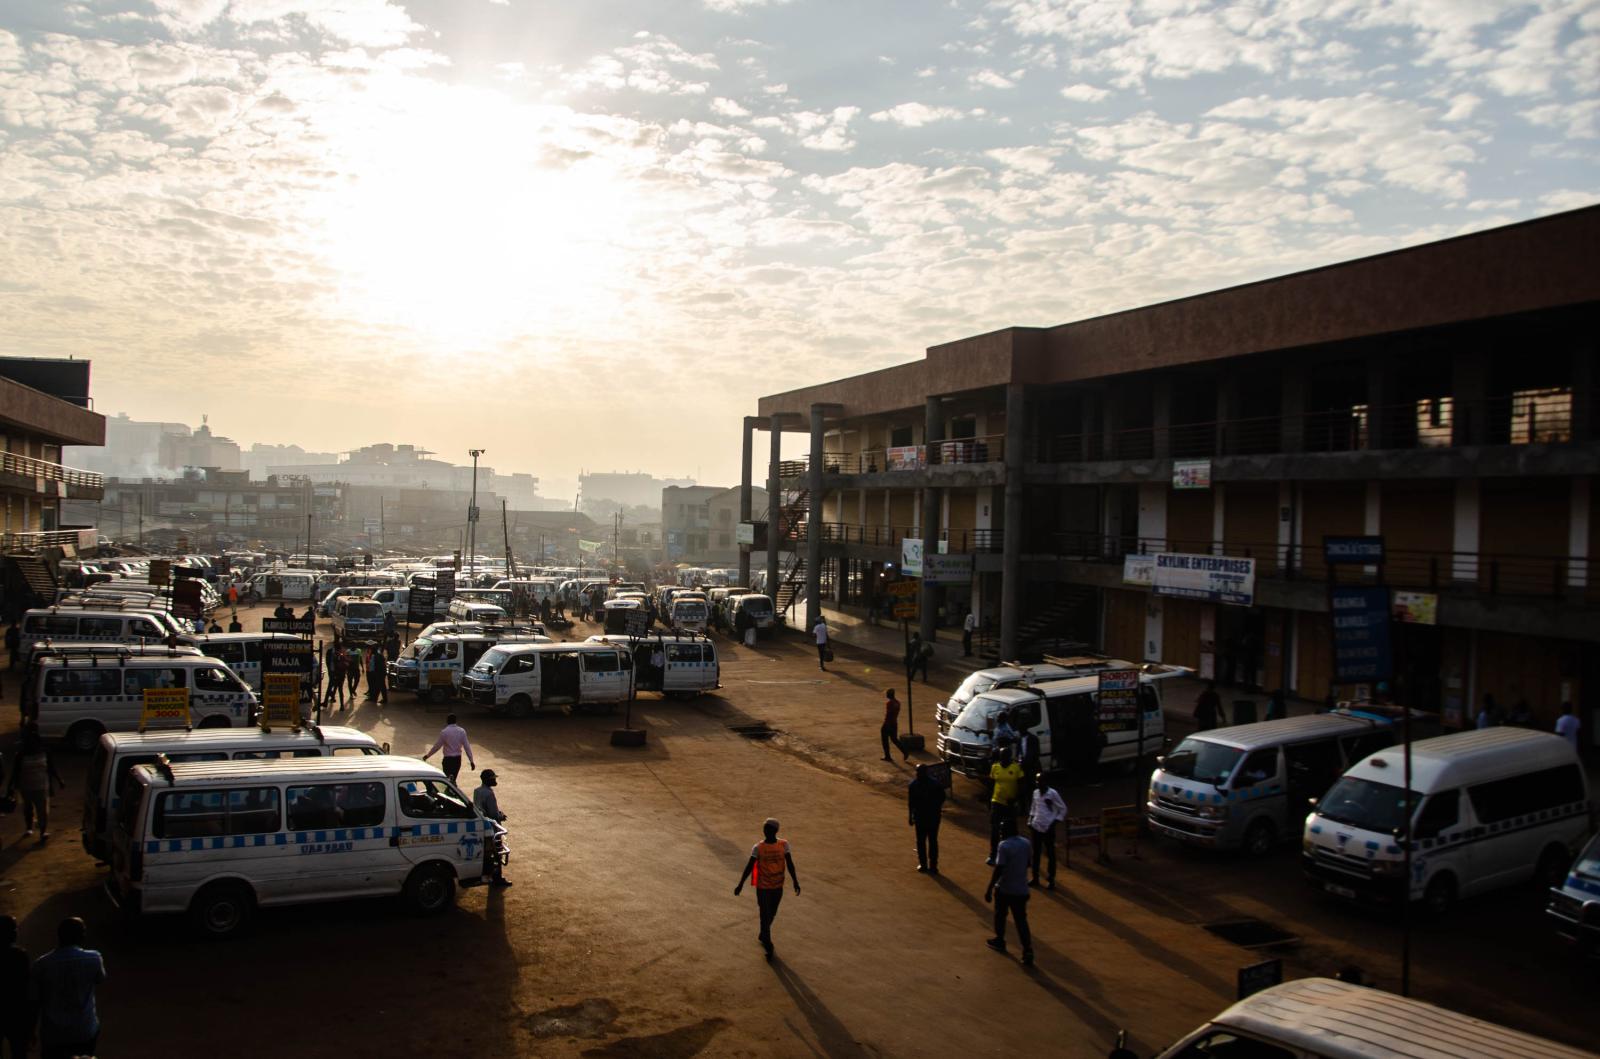 The kisenyi taxi park , Kampala